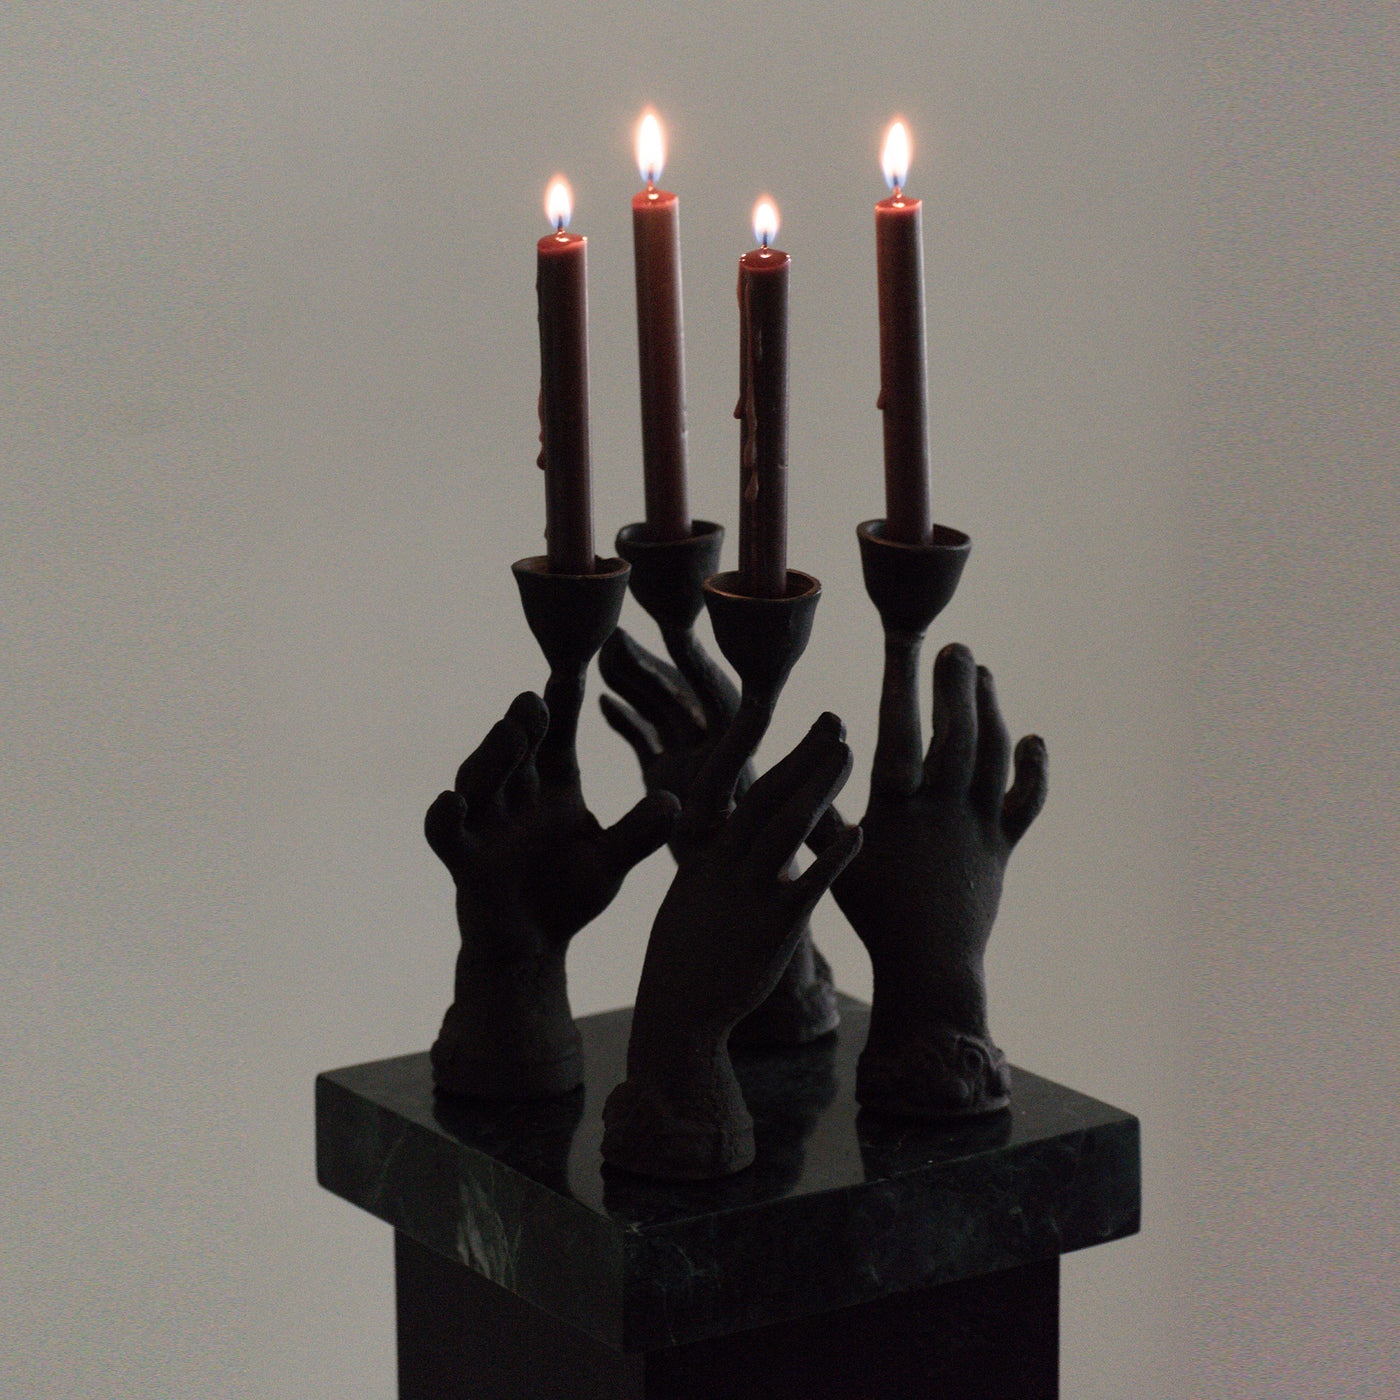 ASHIESH SHAH Multi Hand of Adam Candle Holder